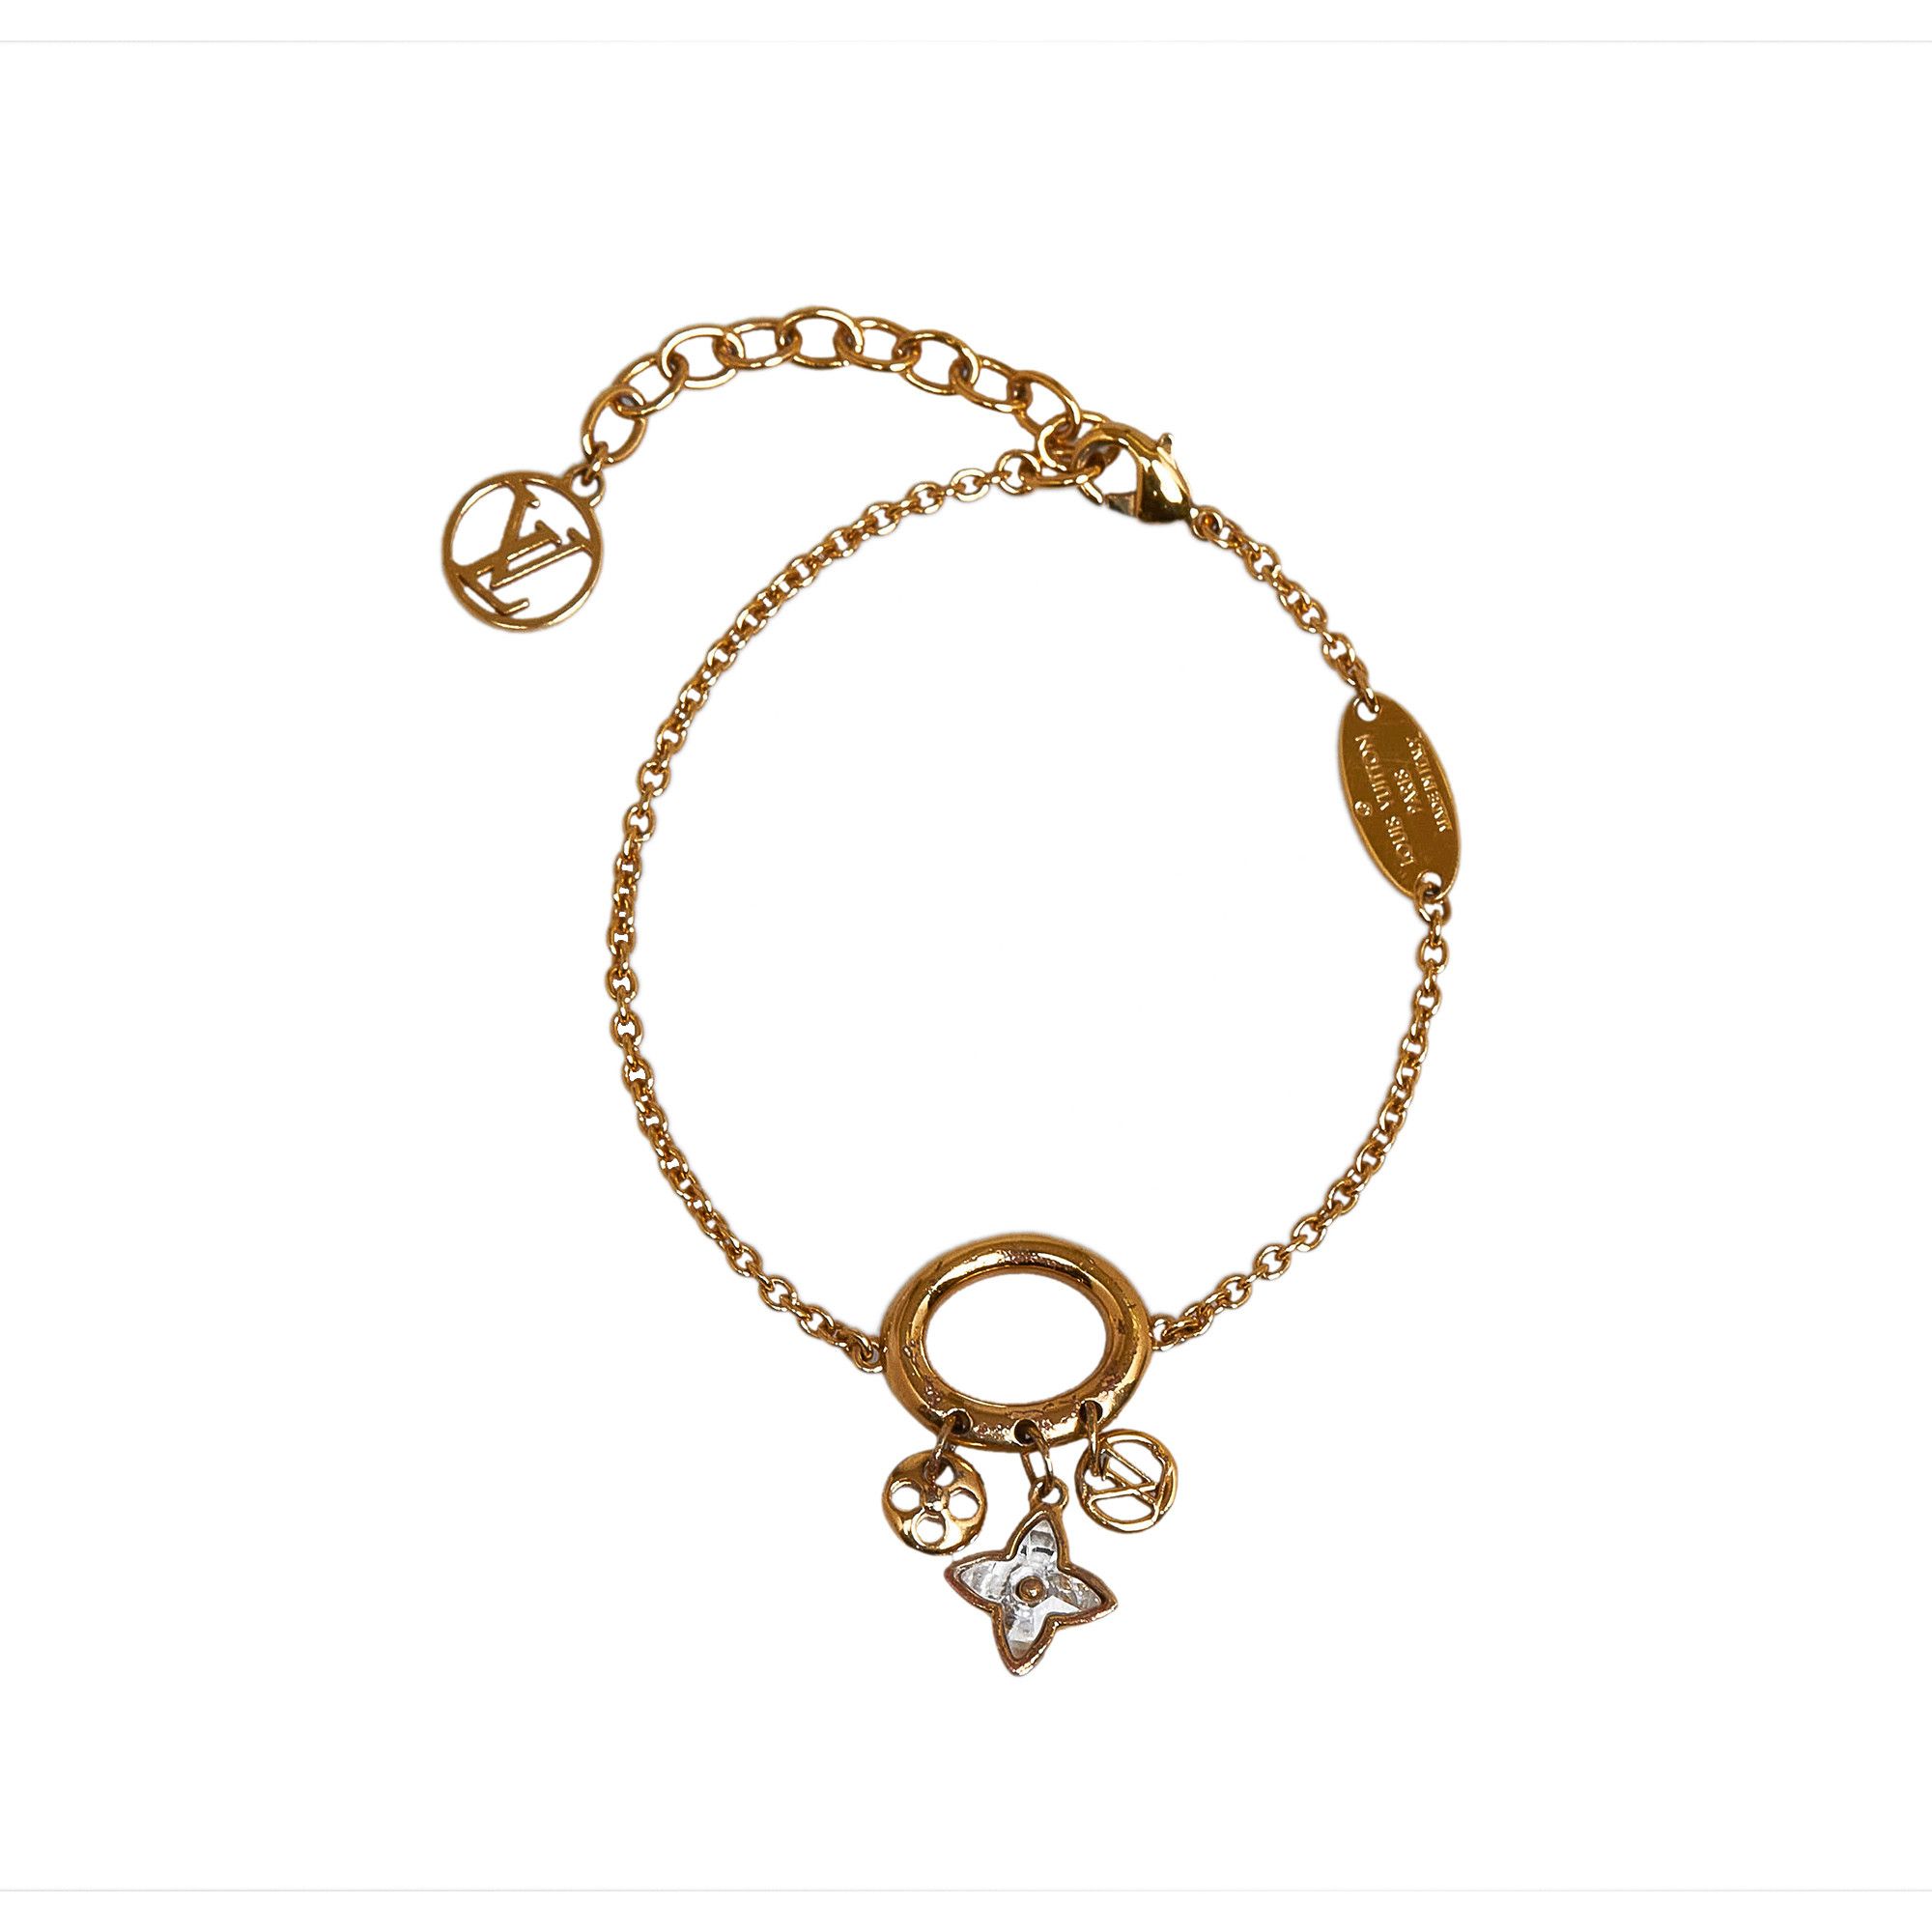 Louis Vuitton My Blooming Strass Bracelet (M00583)